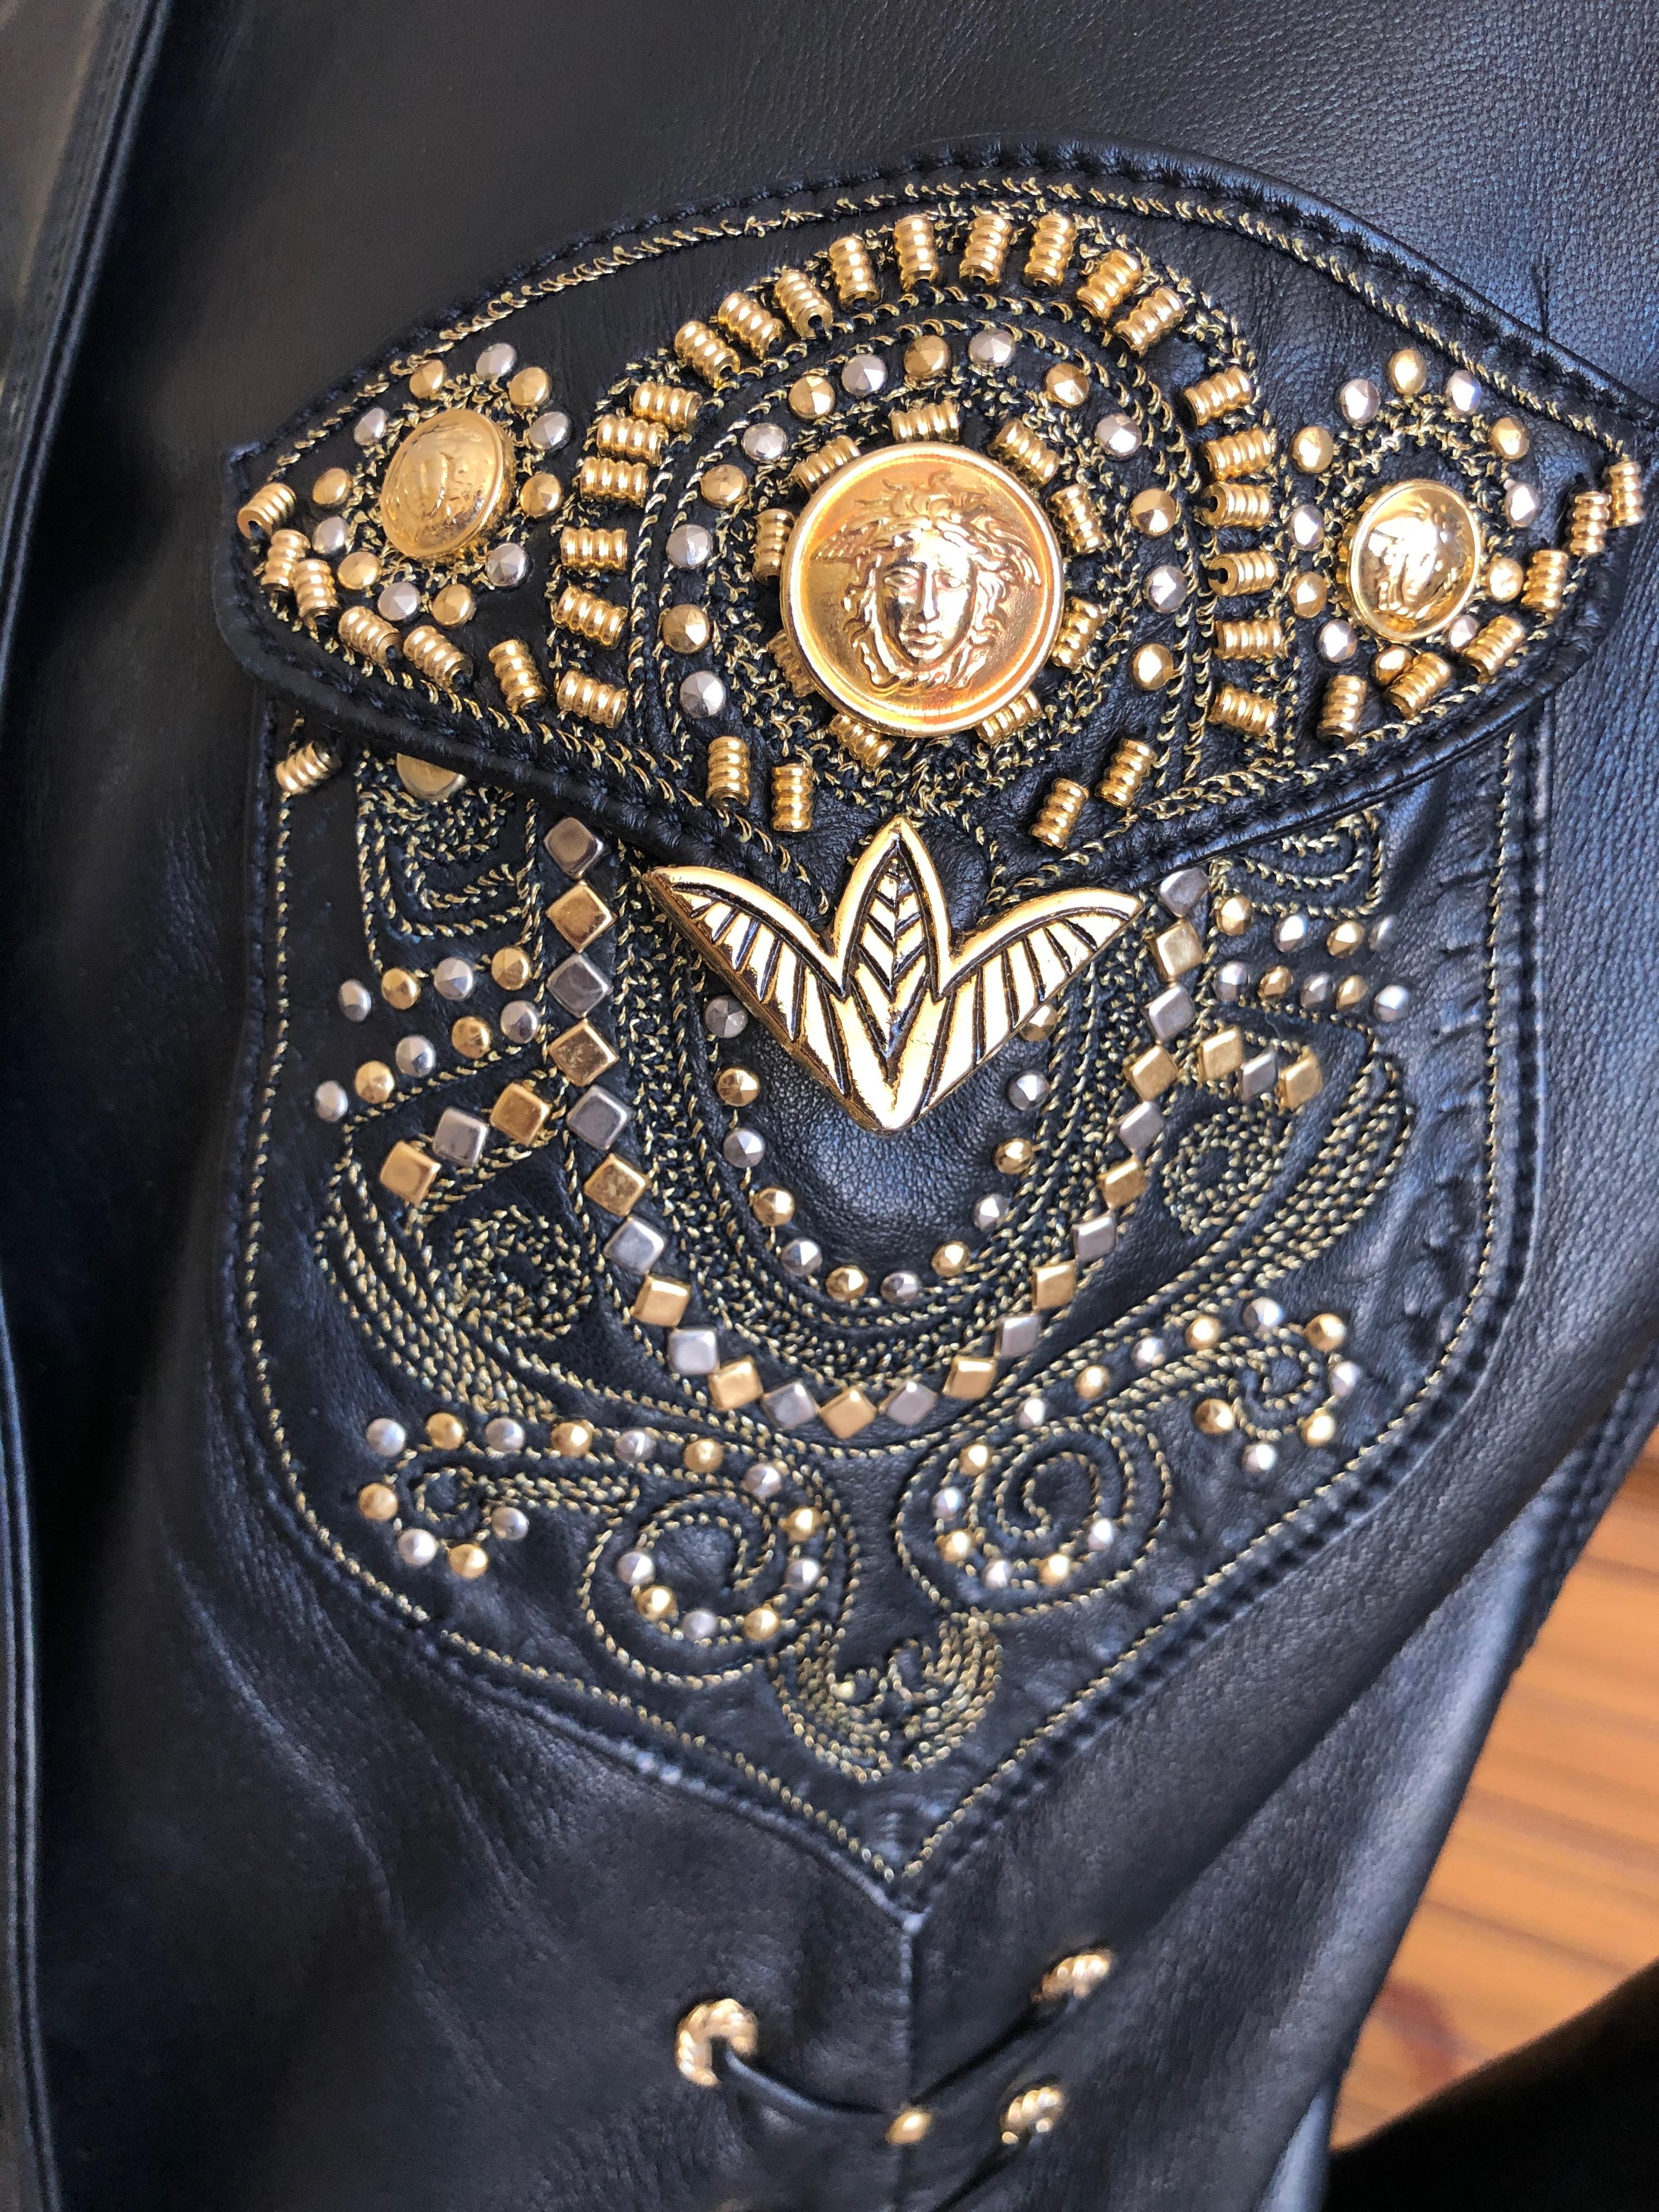 Gianni Versace 1990 Lambskin Leather Moto Jacket with Gold Embellishment 1